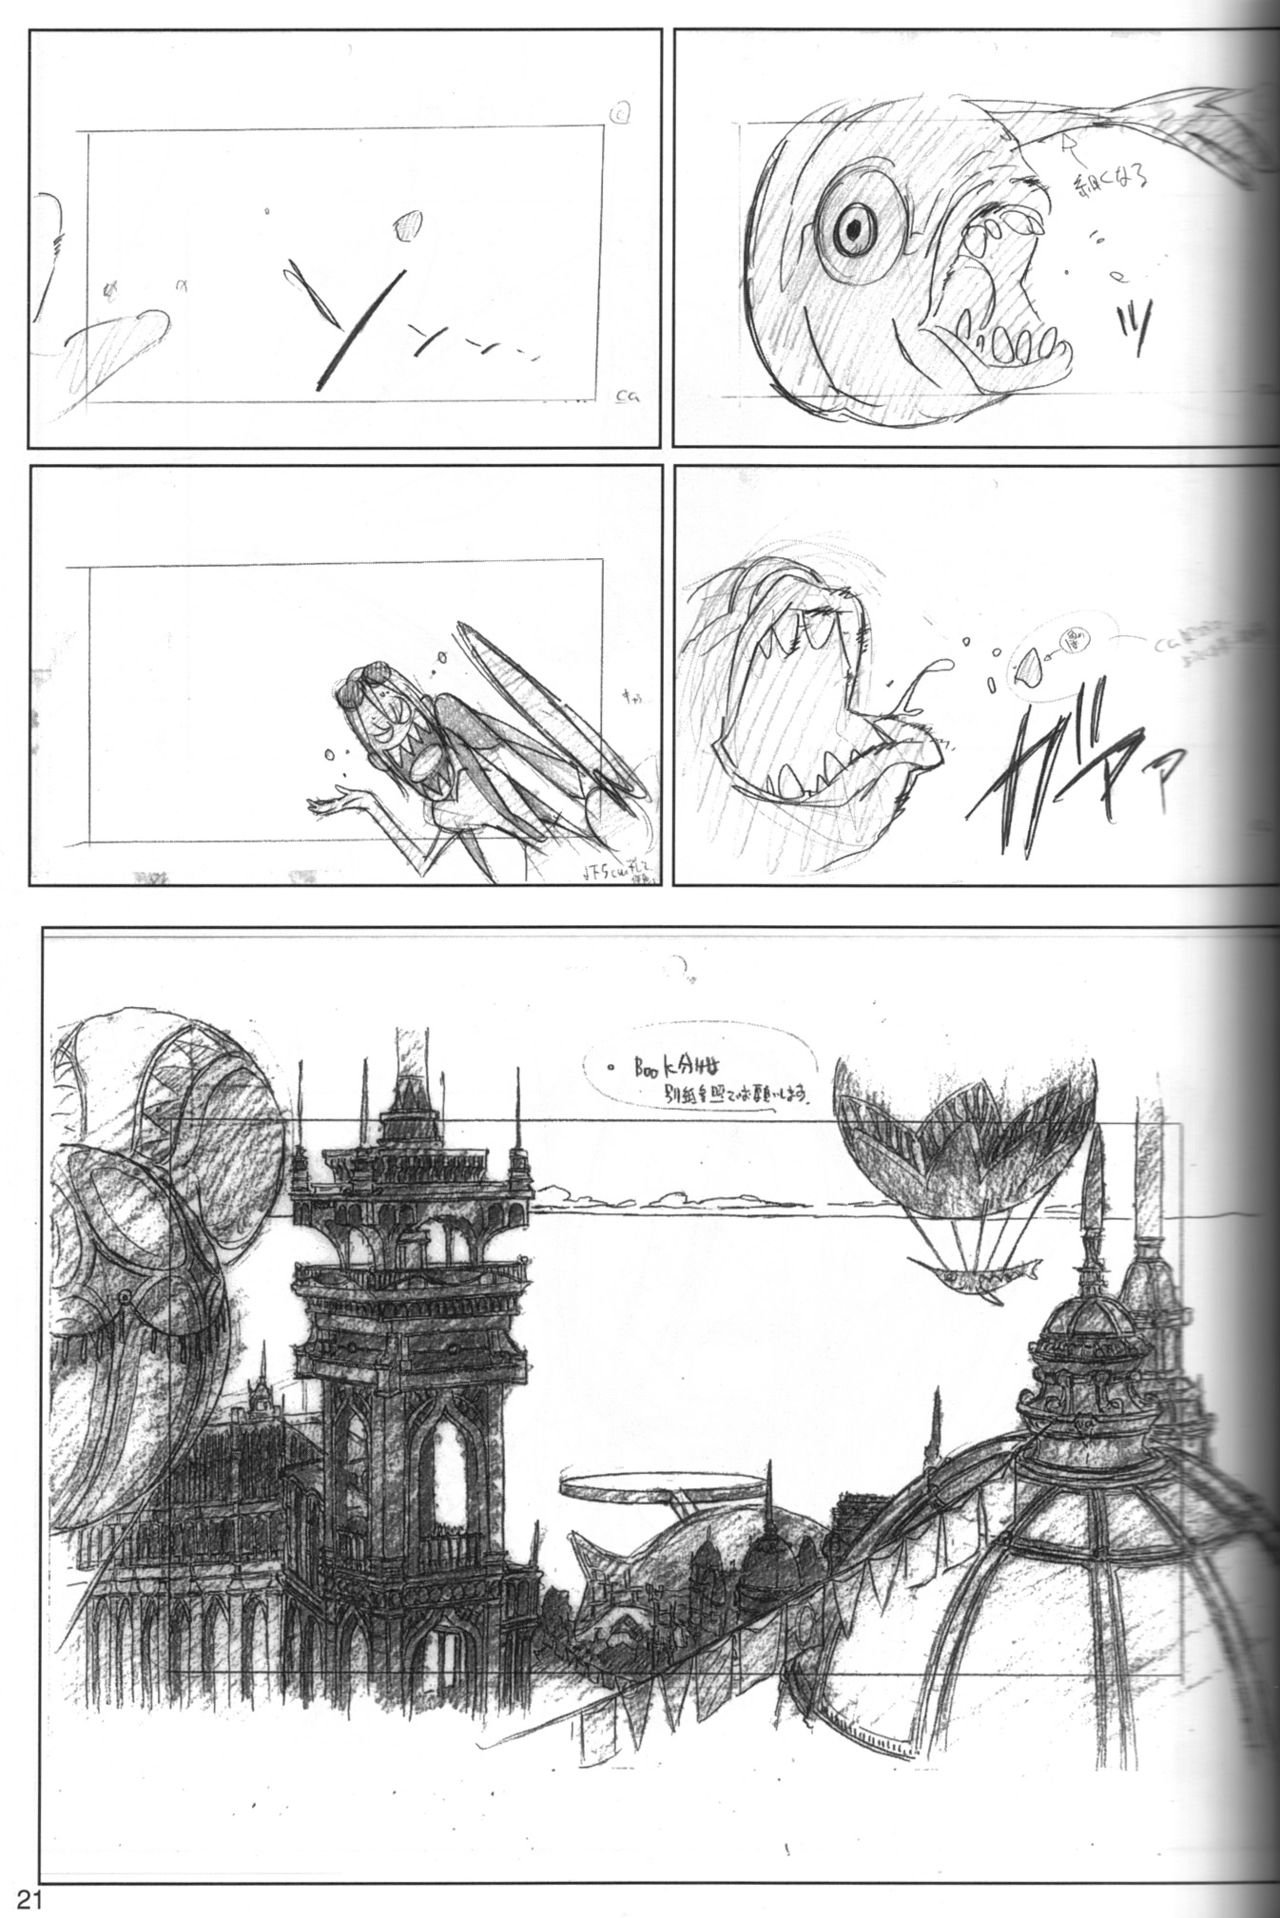 [Artbook] Sushio One Piece Movie 06 - Pencil Test and Design Book 19